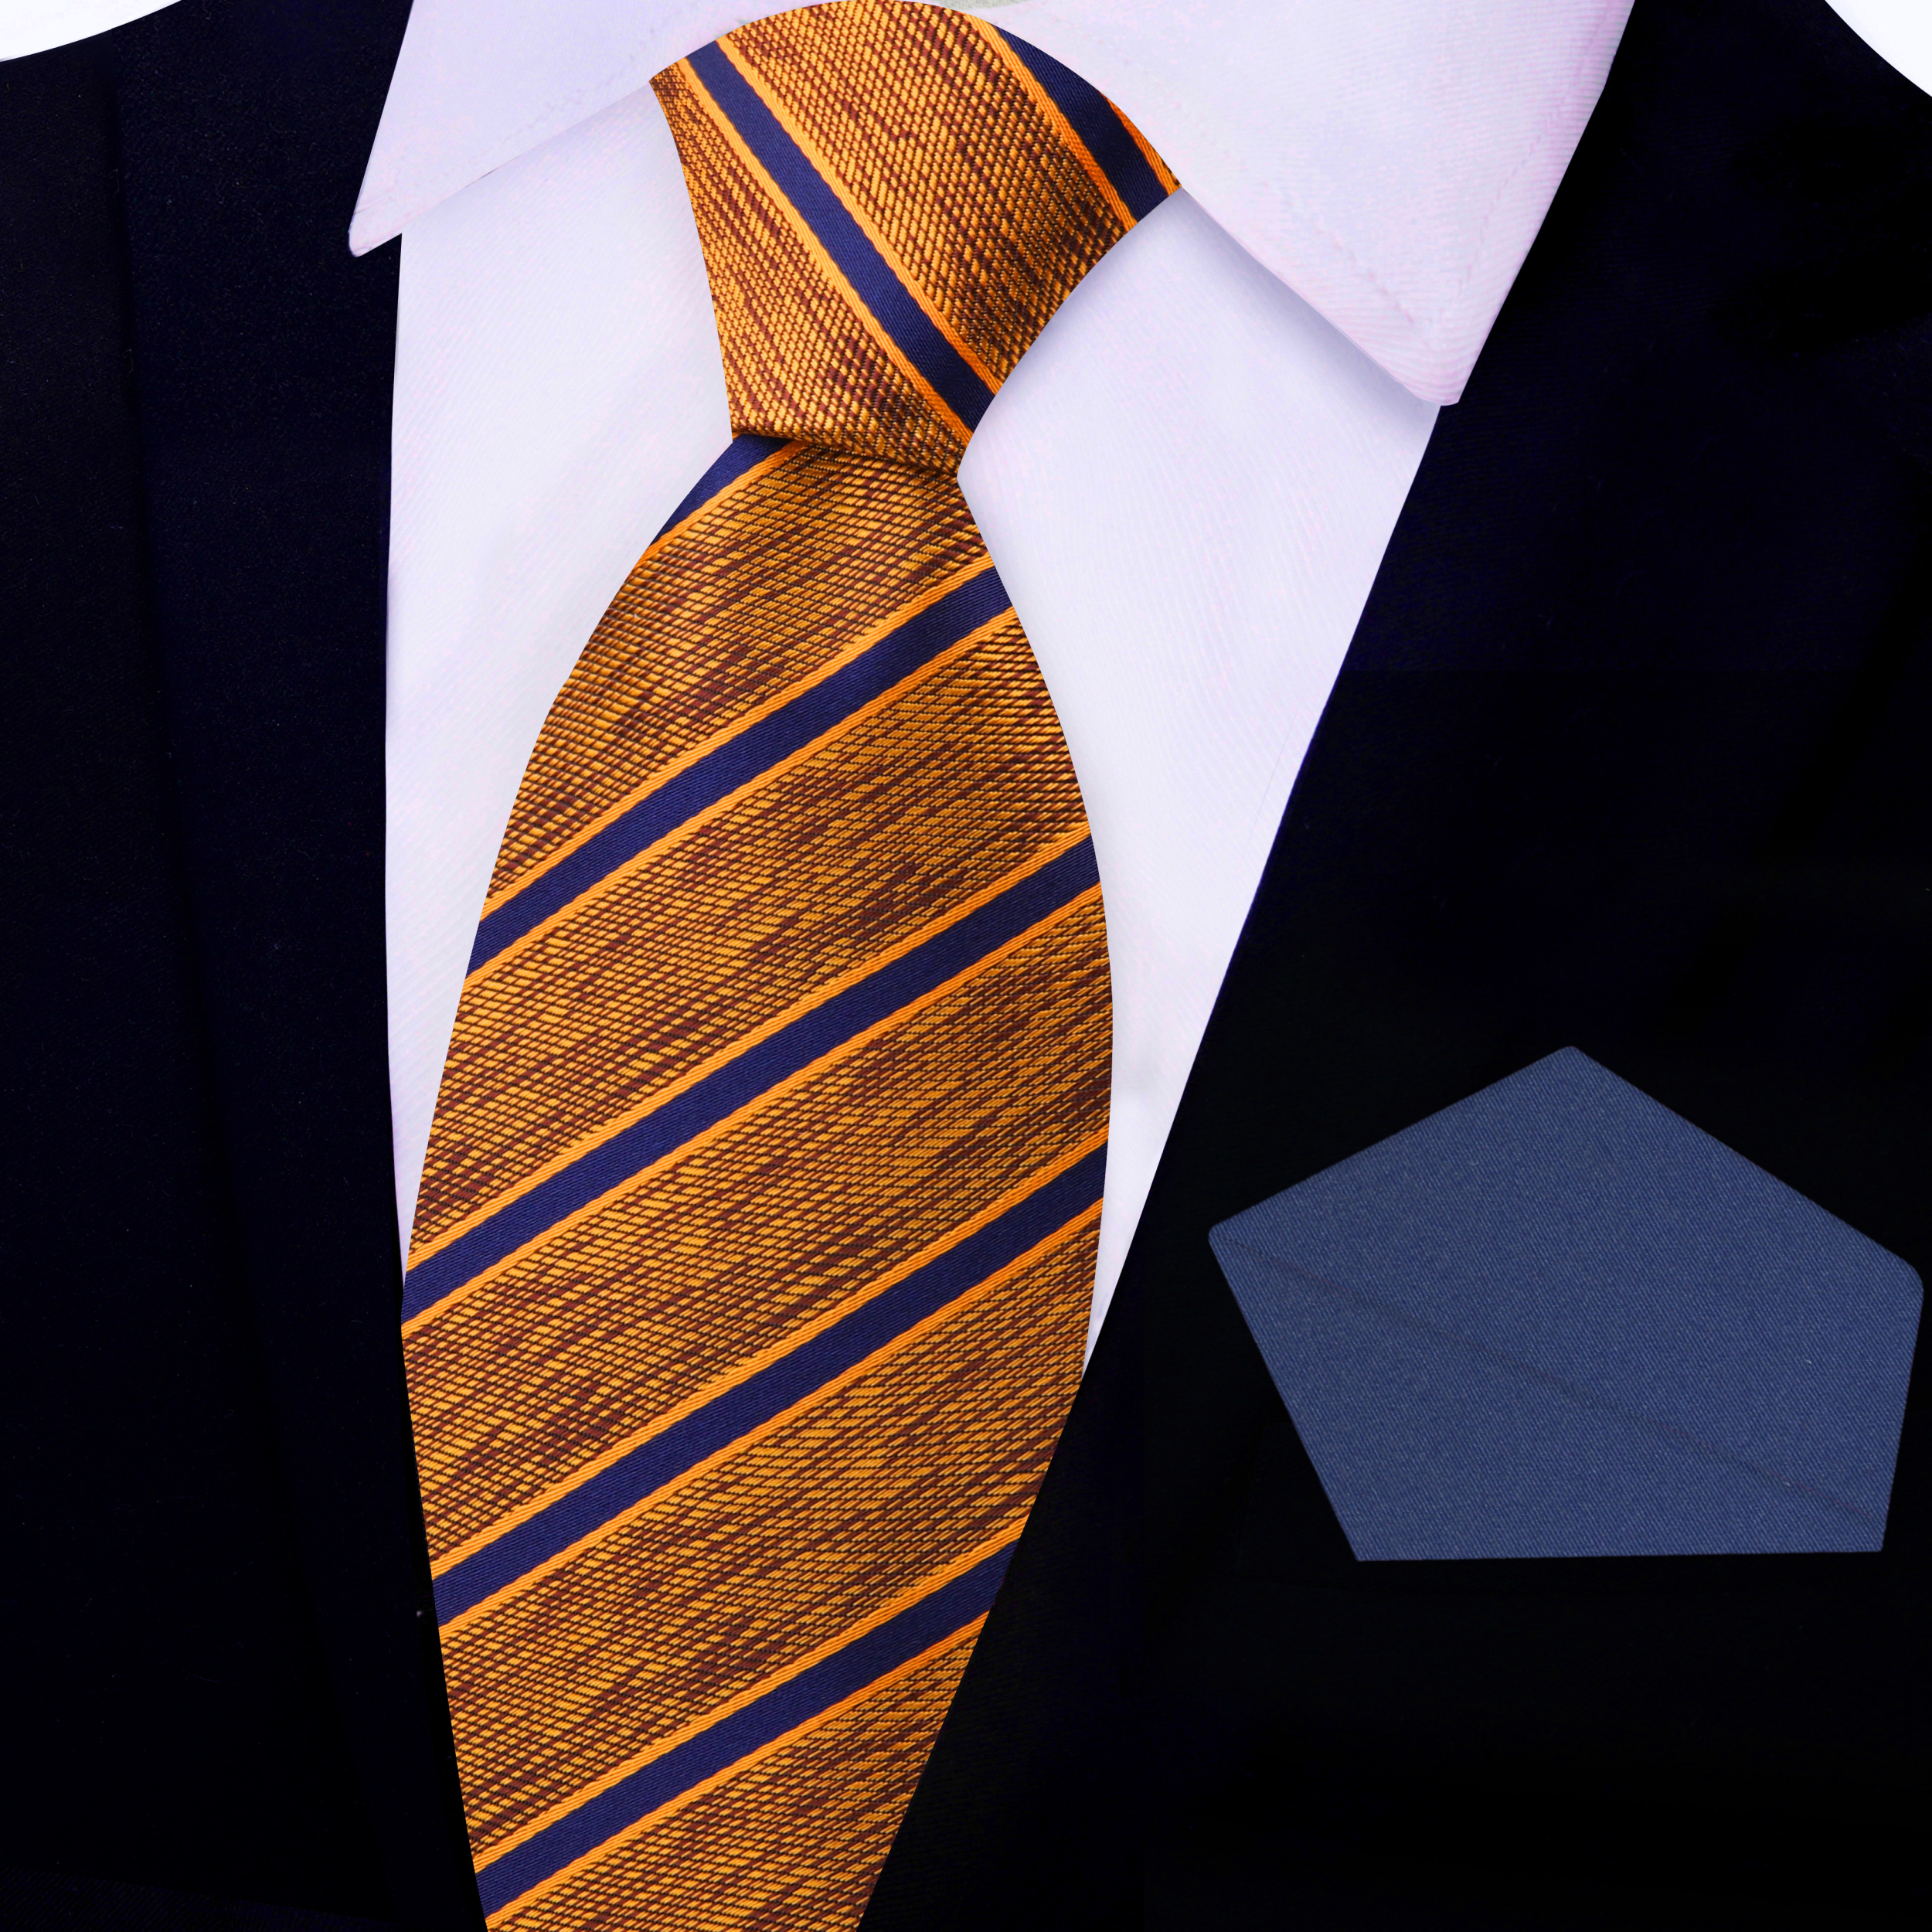 Striped Orange Silk Tie - Tailor Store